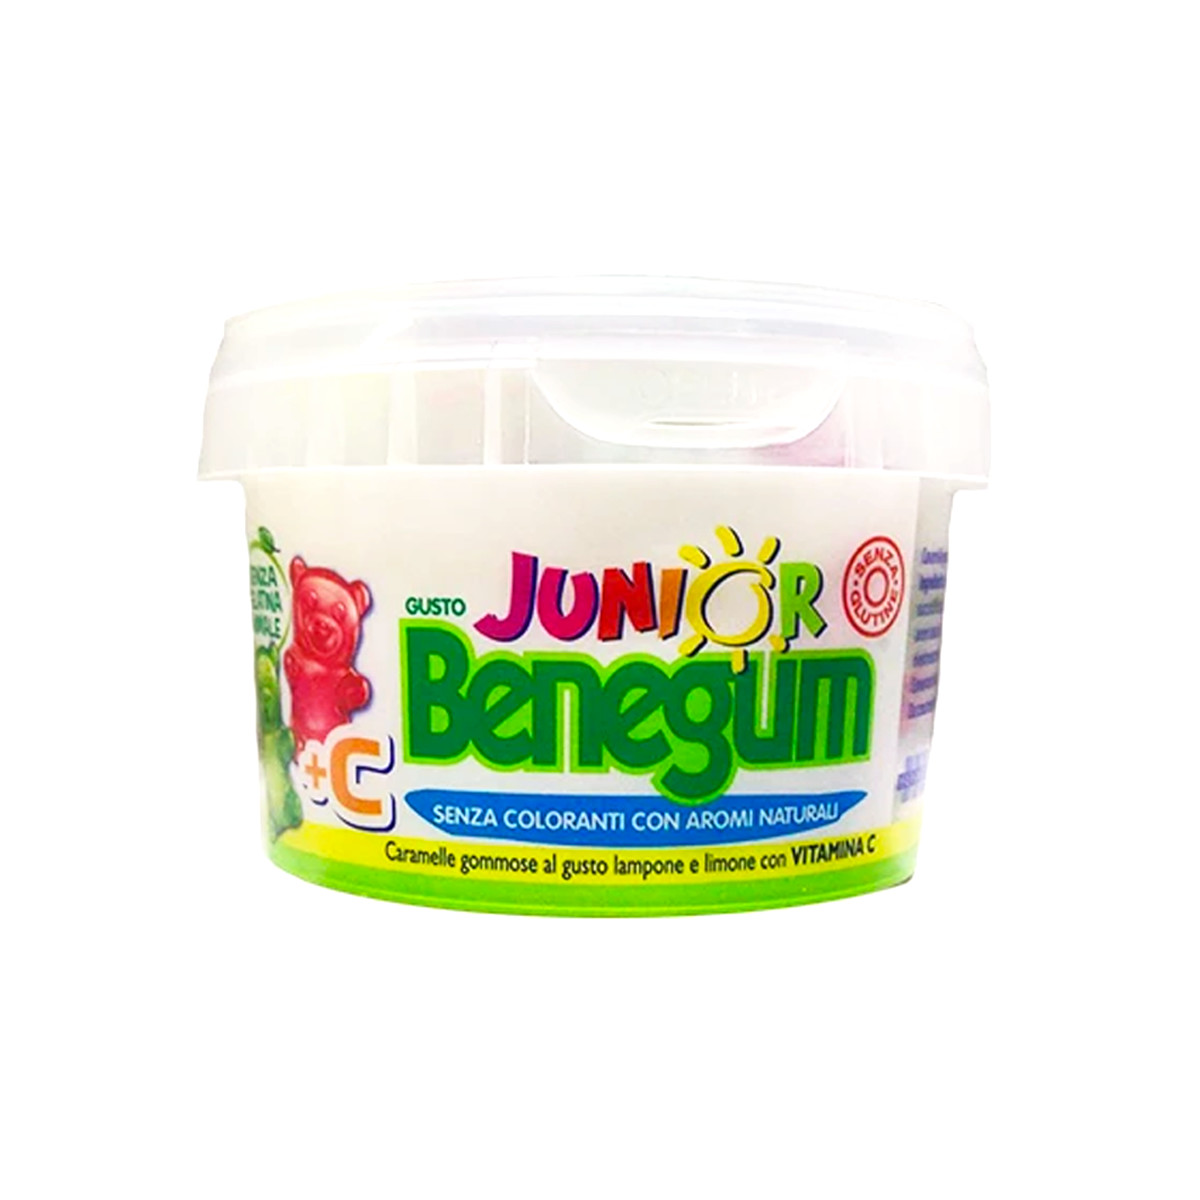 979821687 - Benegum Junior Veggie Bar caramelle gommose vitamina C 130g - 4735796_2.jpg